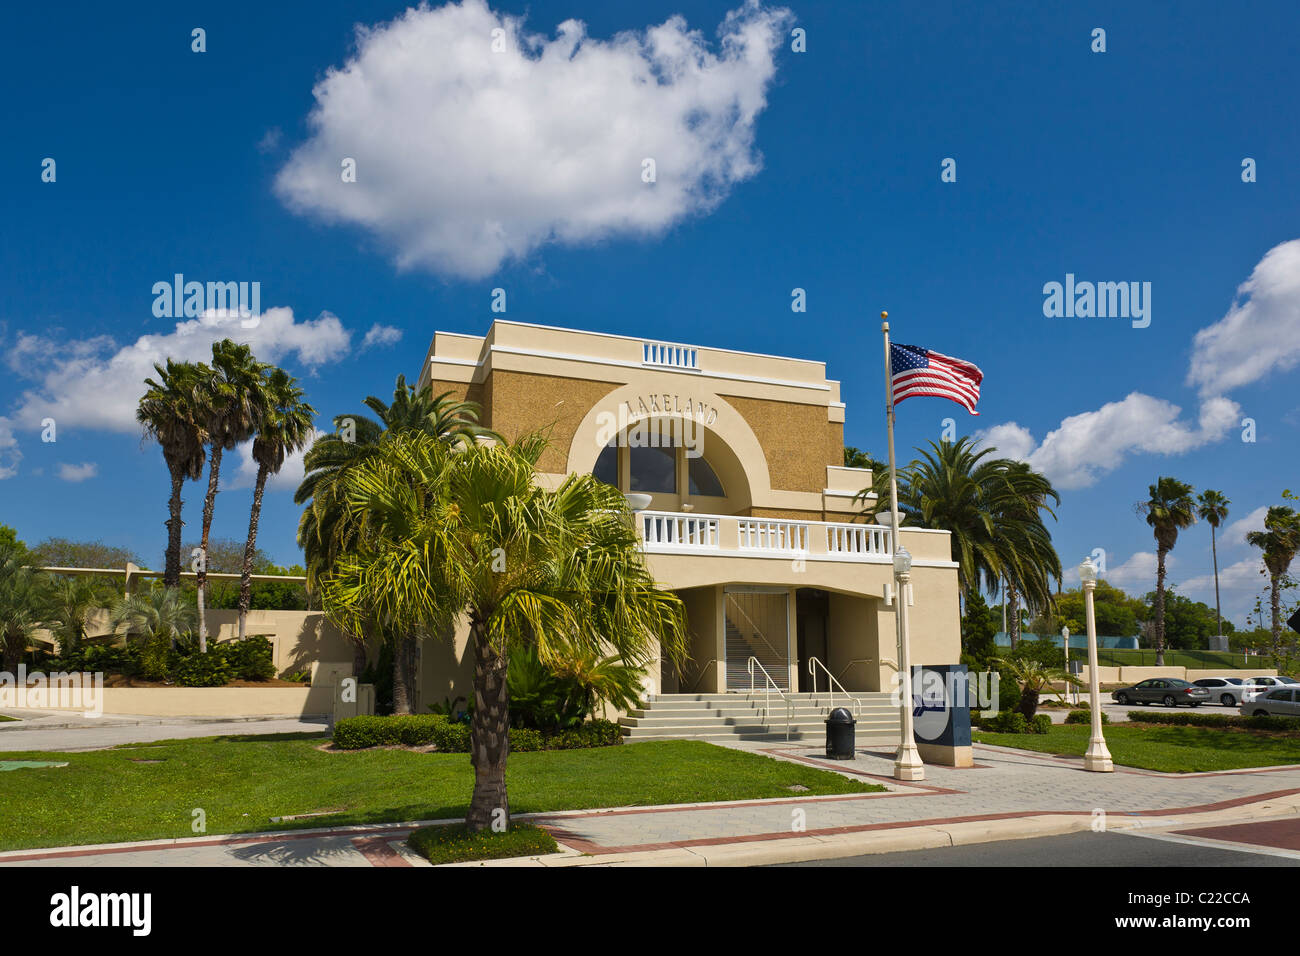 Estación de ferrocarril de Amtrak en Lakeland Florida Foto de stock